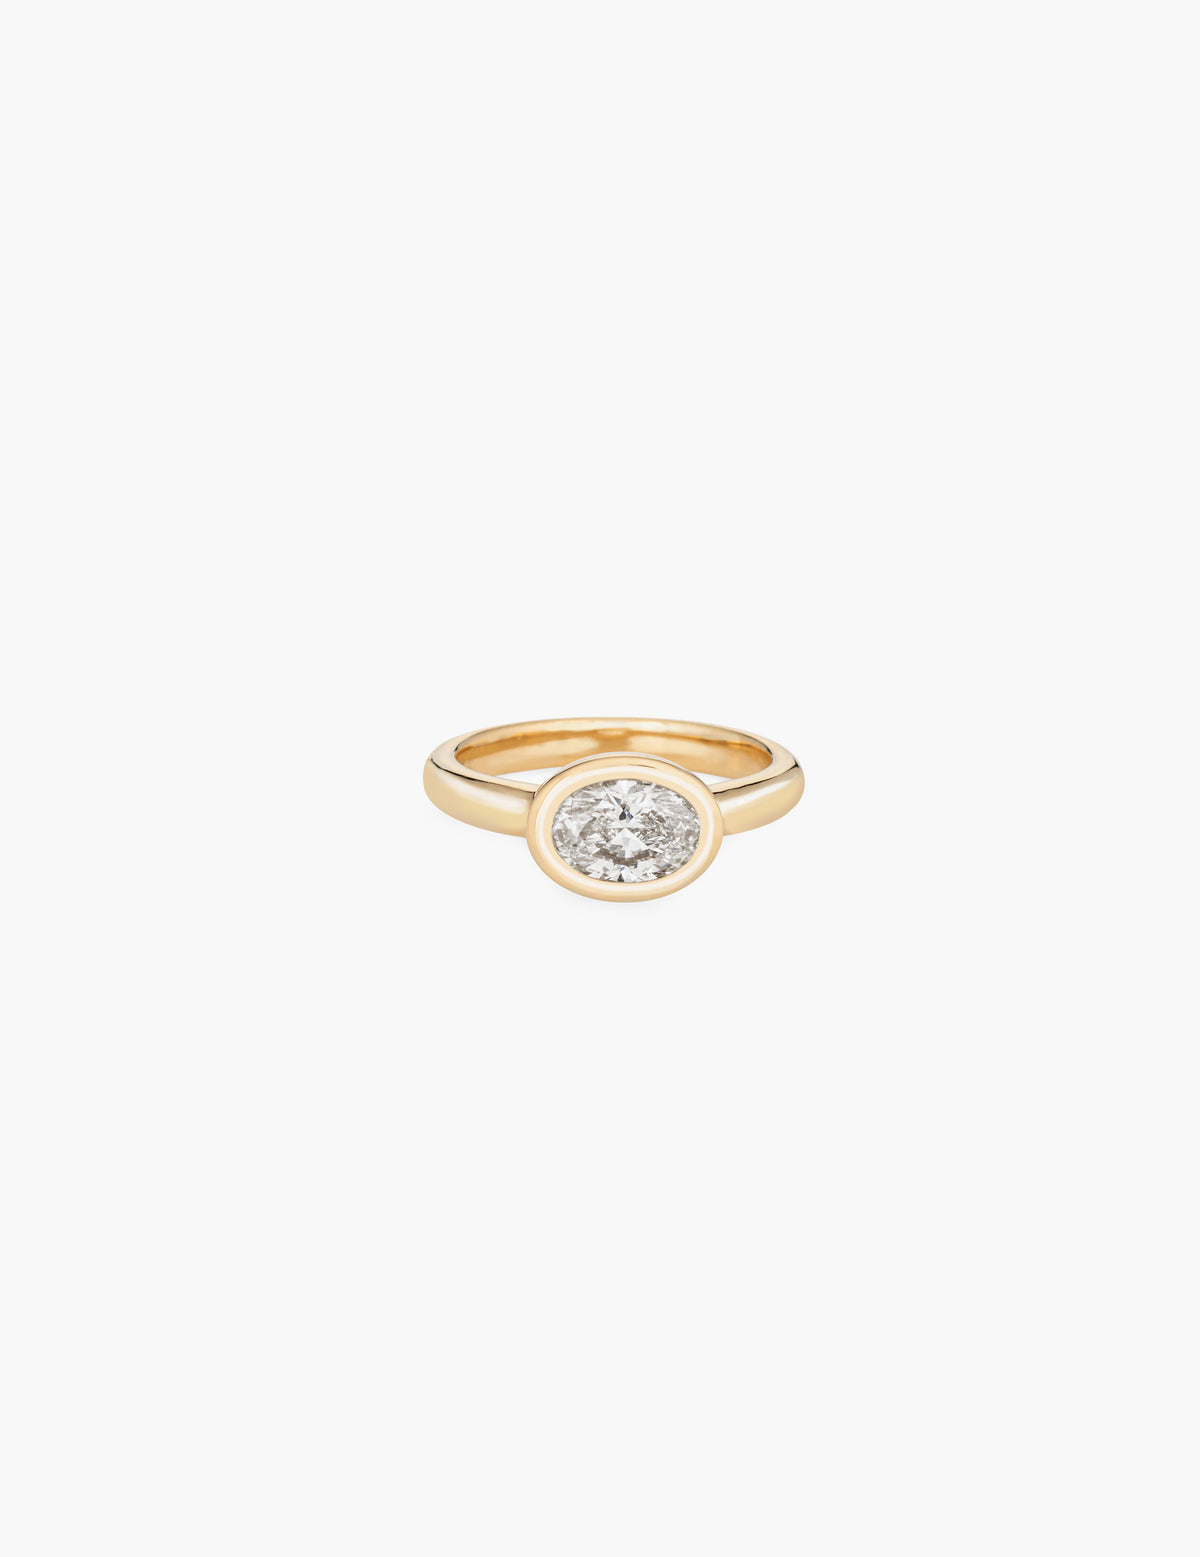 Mira Ring with 1.24ct Natural Diamond